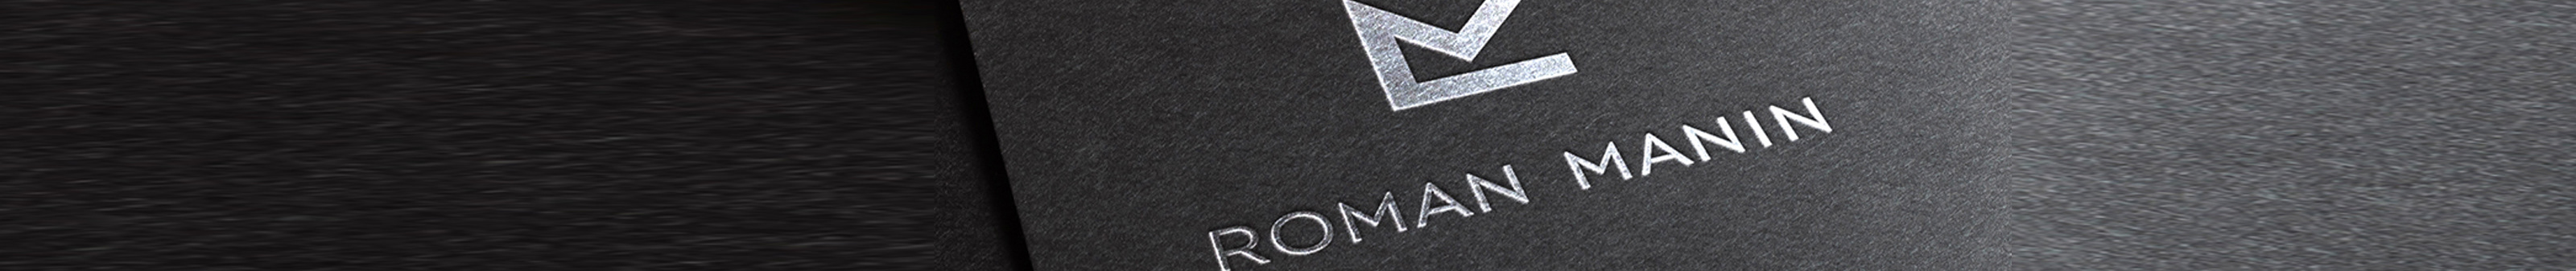 Banner de perfil de Roman Manin